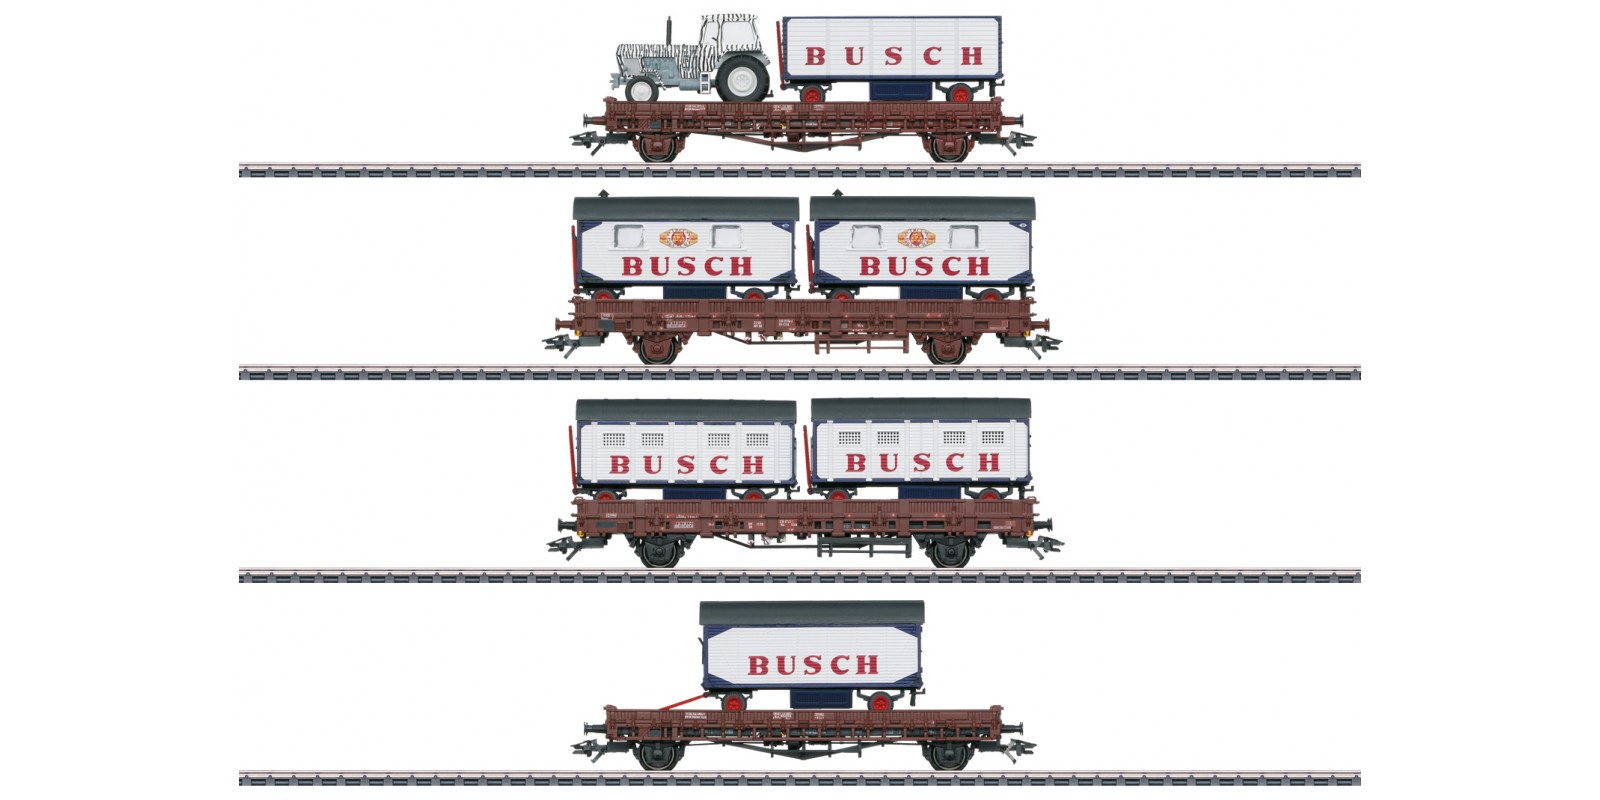 45040 Circus Busch Freight Car Set